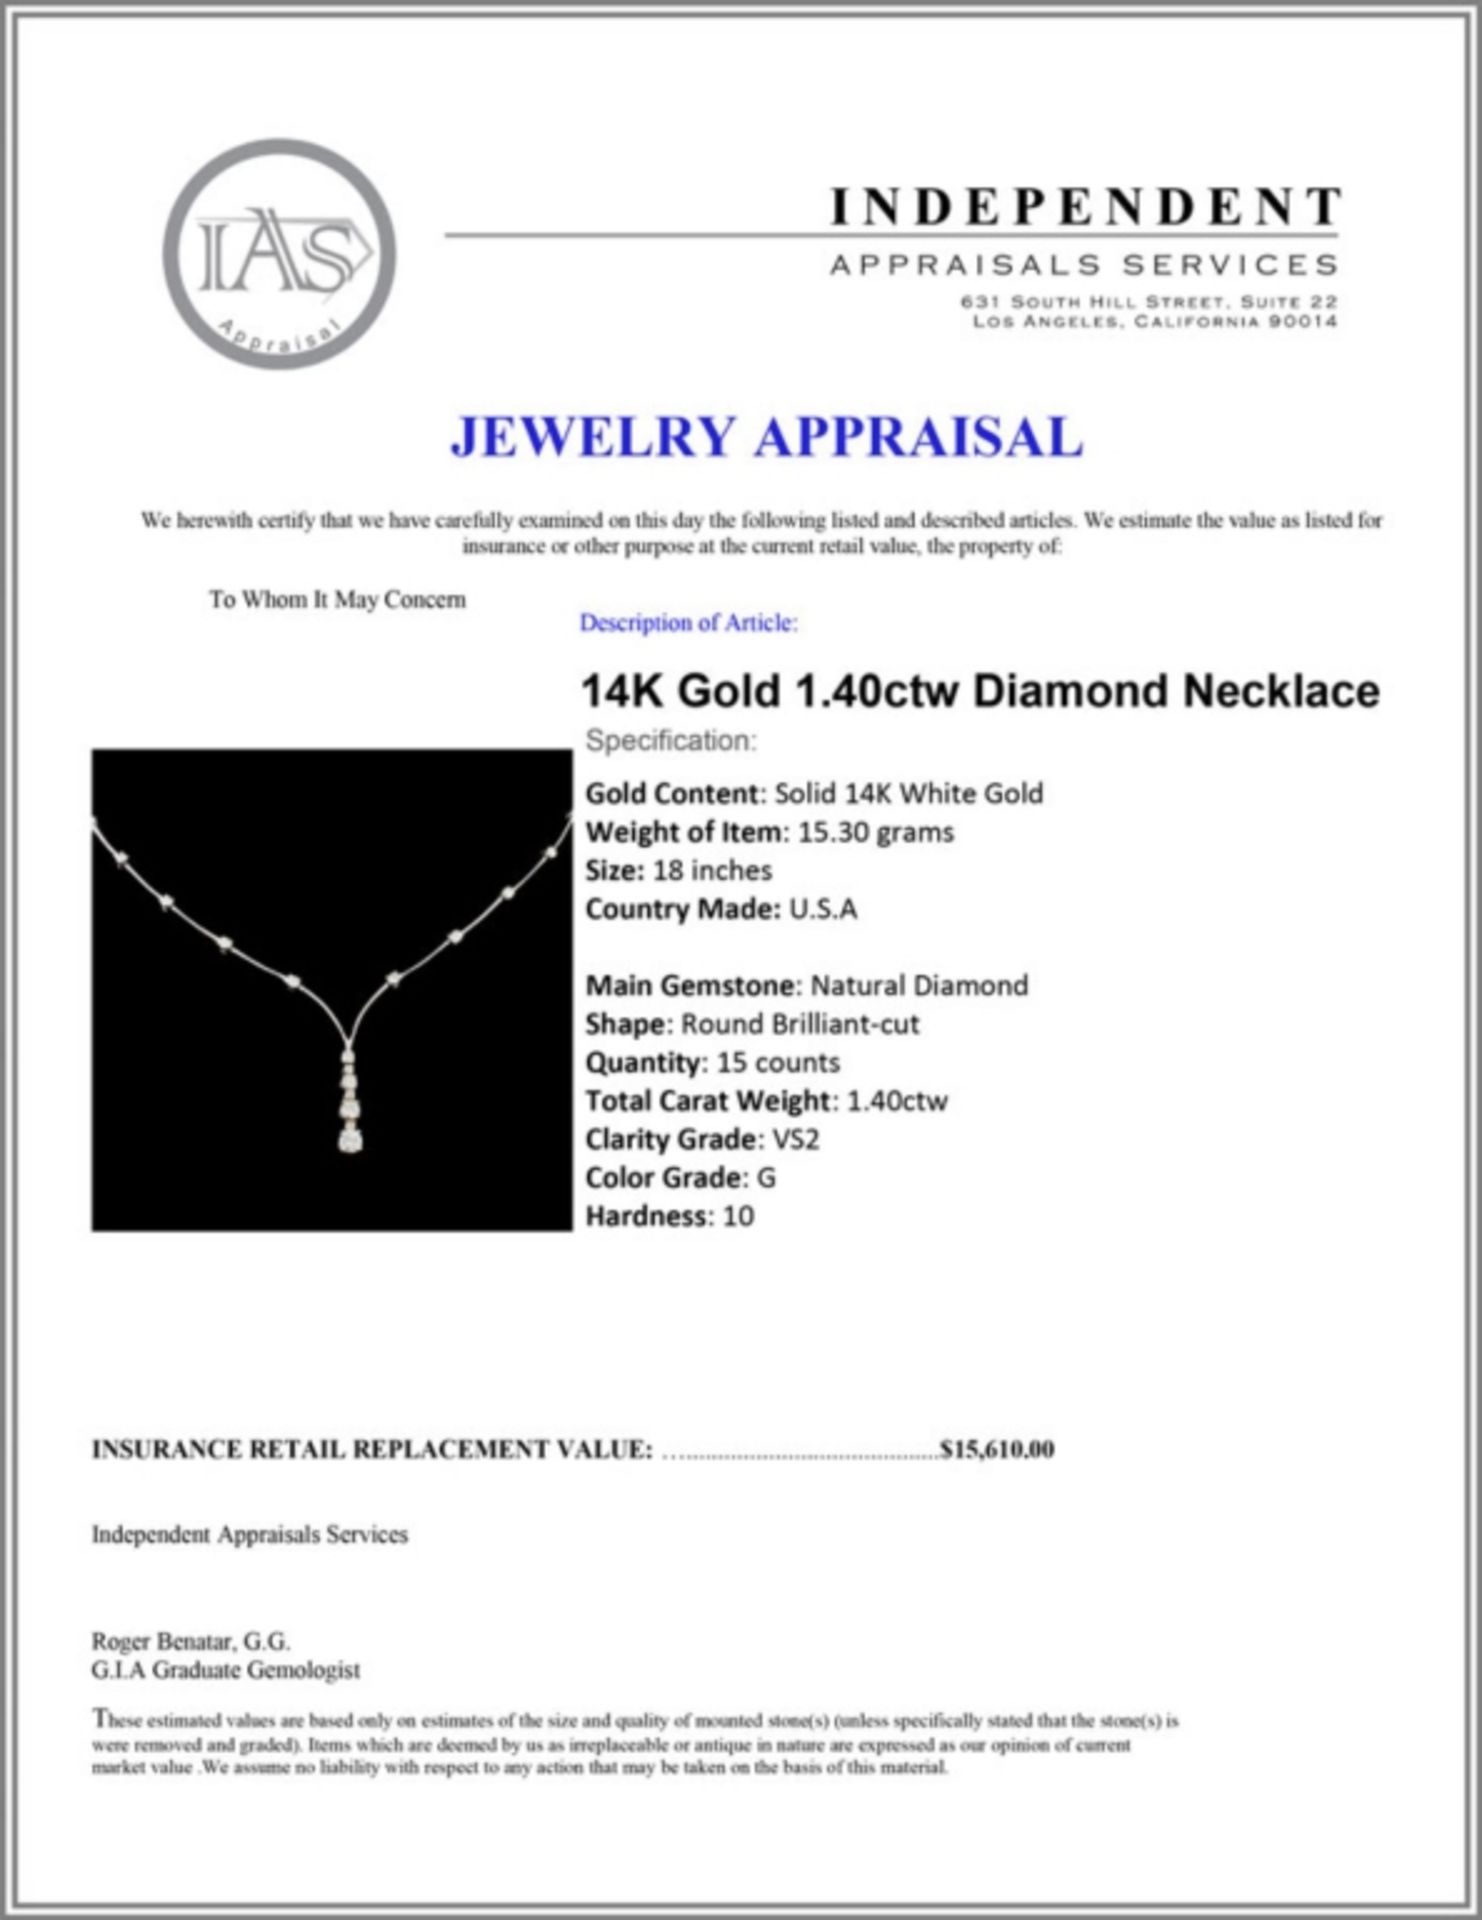 14K Gold 1.40ctw Diamond Necklace - Image 4 of 4